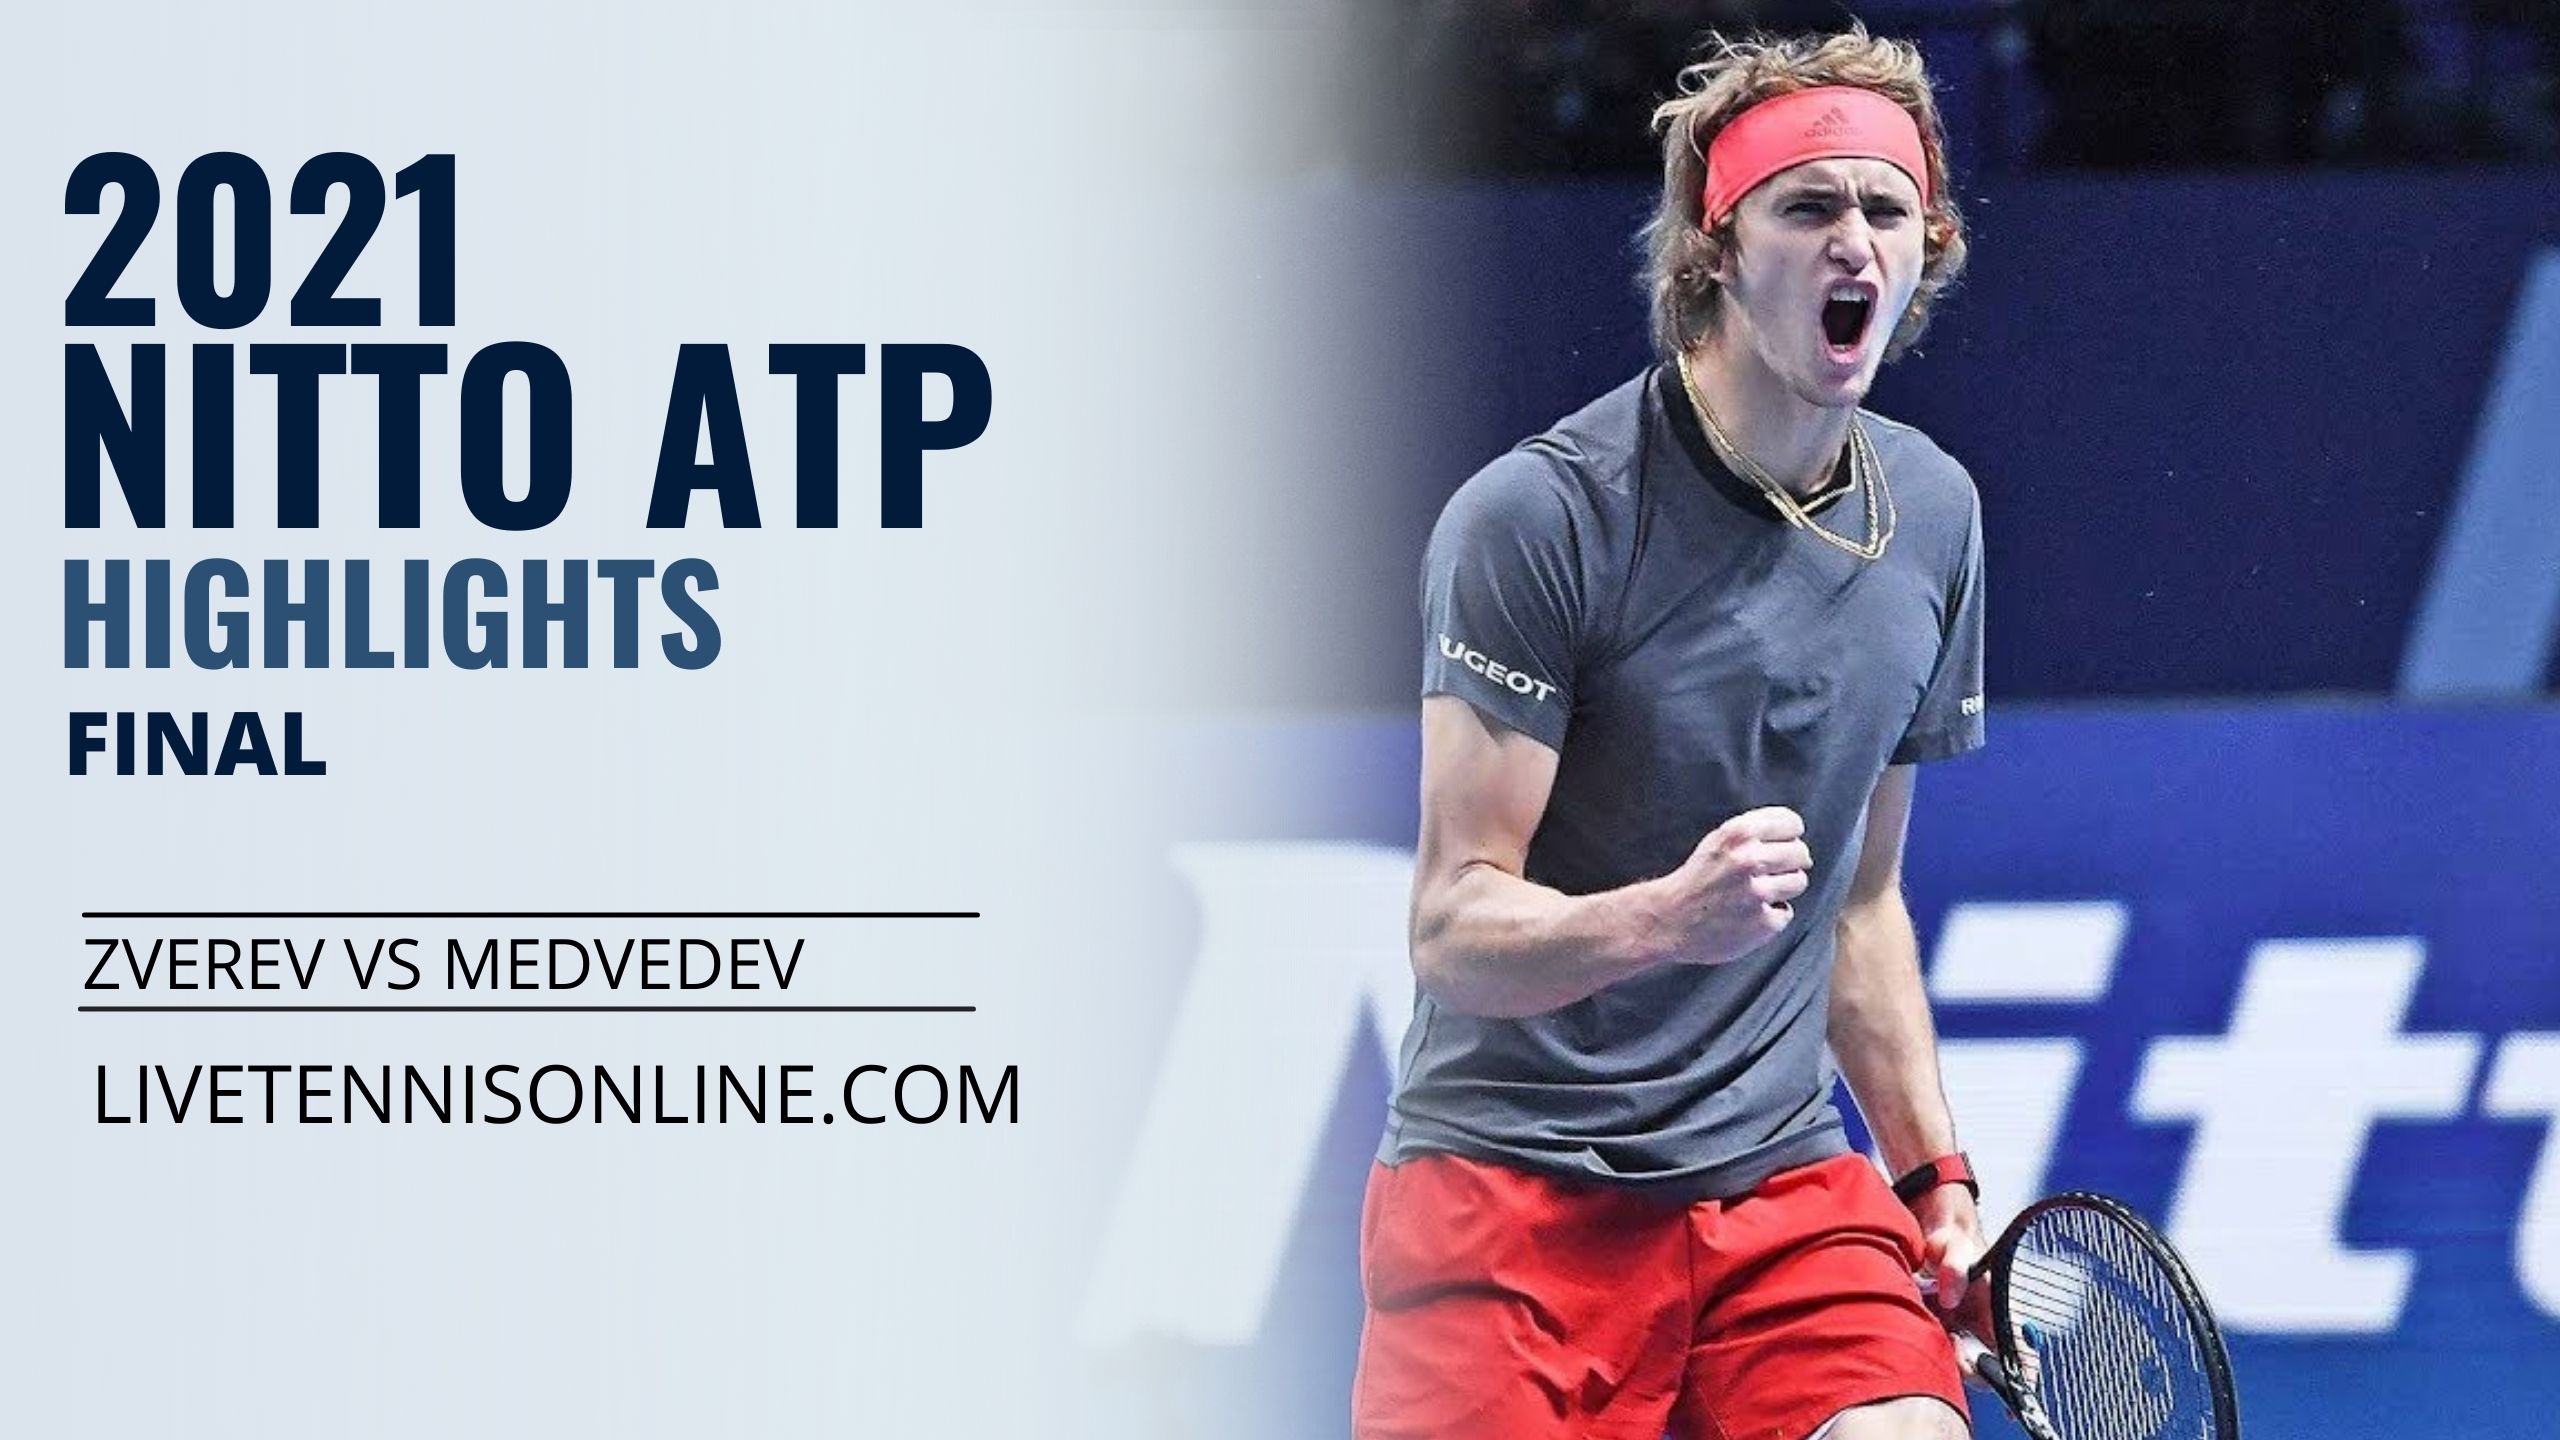 Zverev Vs Medvedev Final Highlights 2021 Nitto ATP Finals